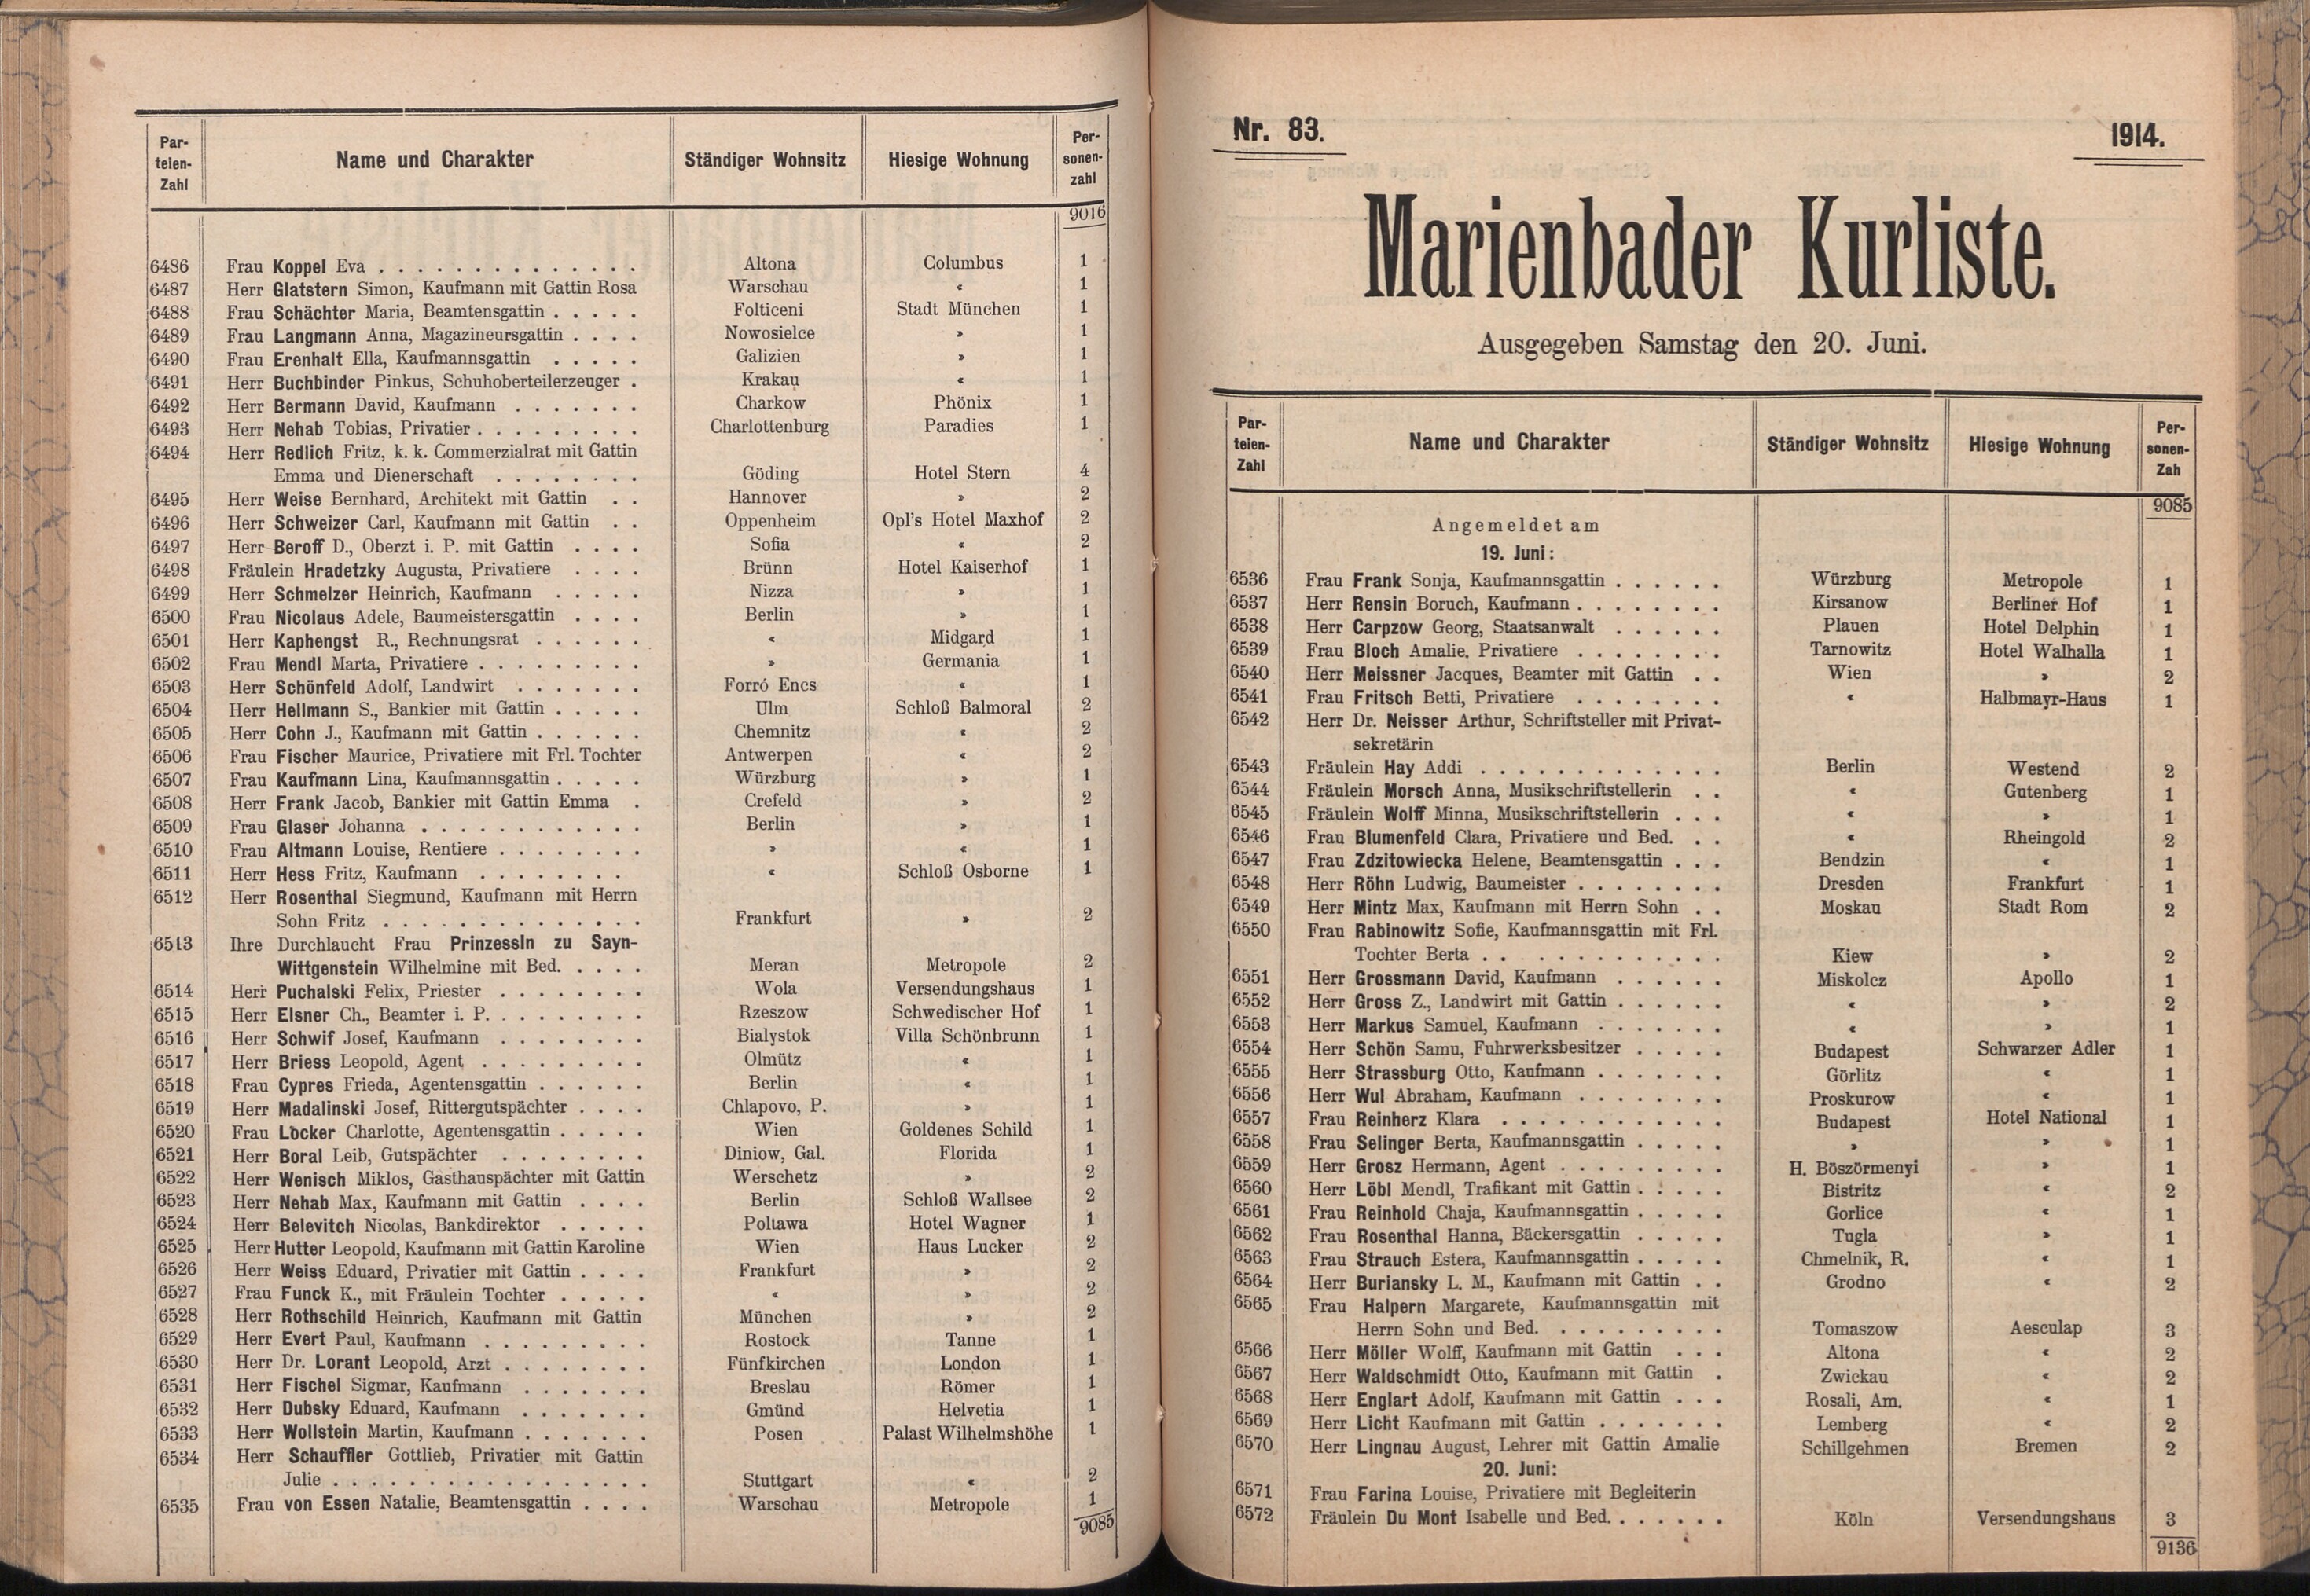 165. soap-ch_knihovna_marienbader-kurliste-1914_1650